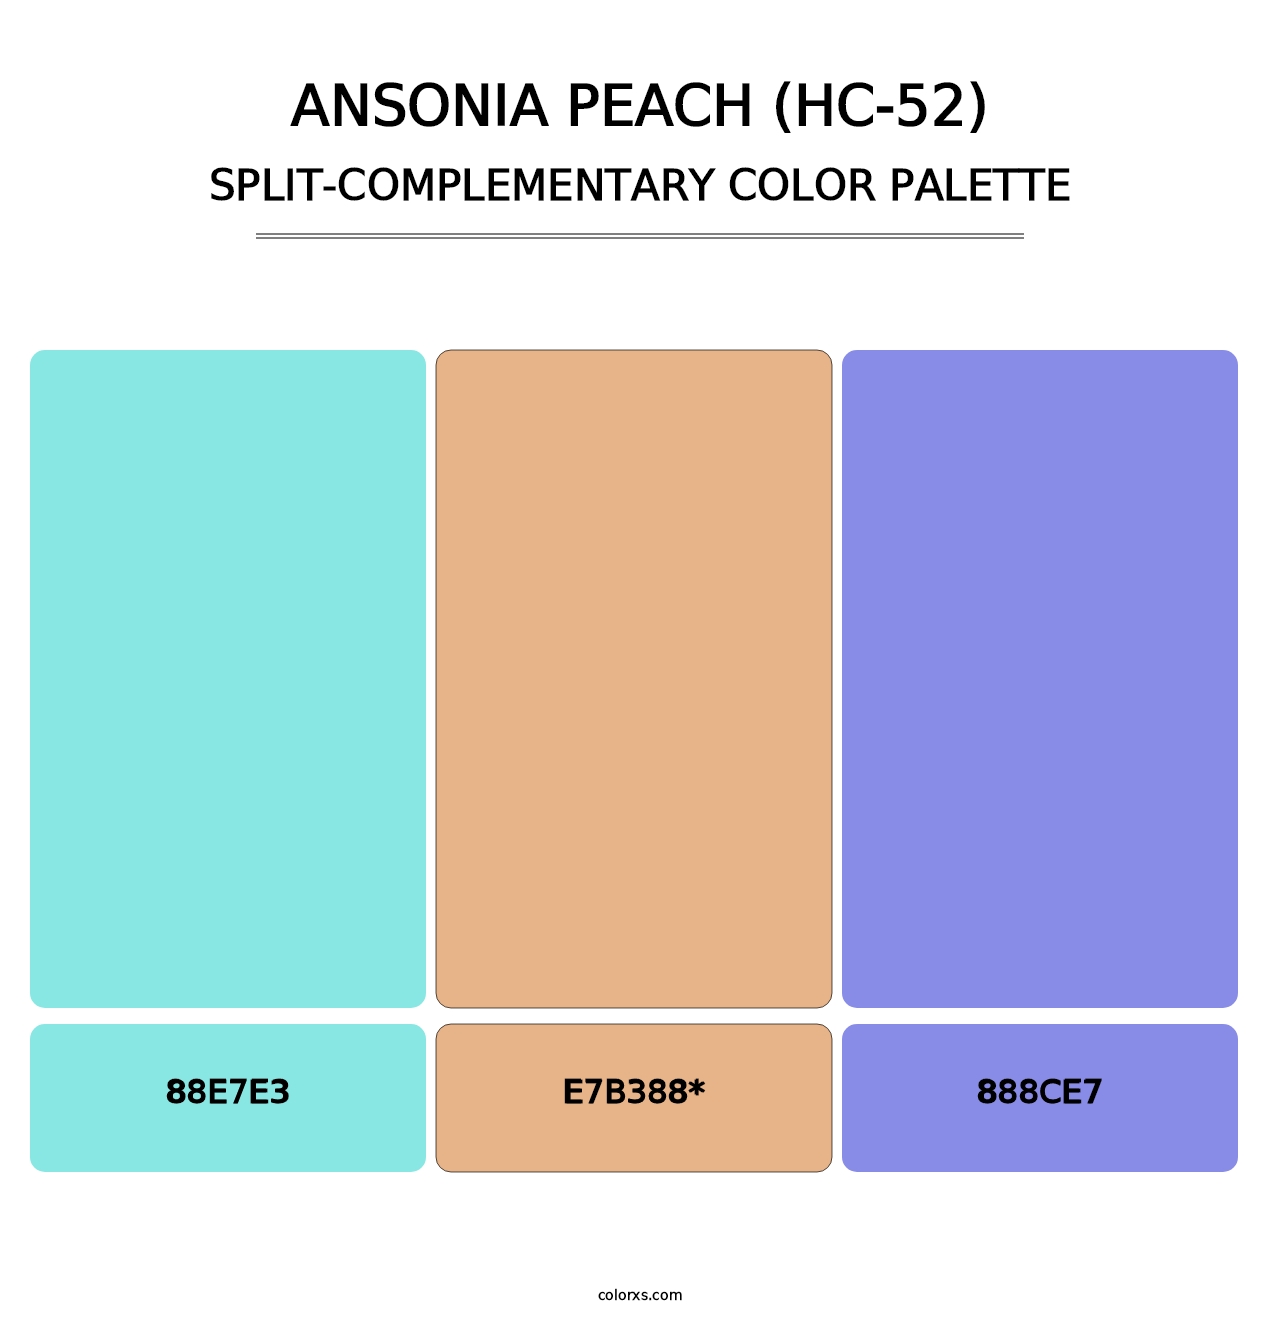 Ansonia Peach (HC-52) - Split-Complementary Color Palette